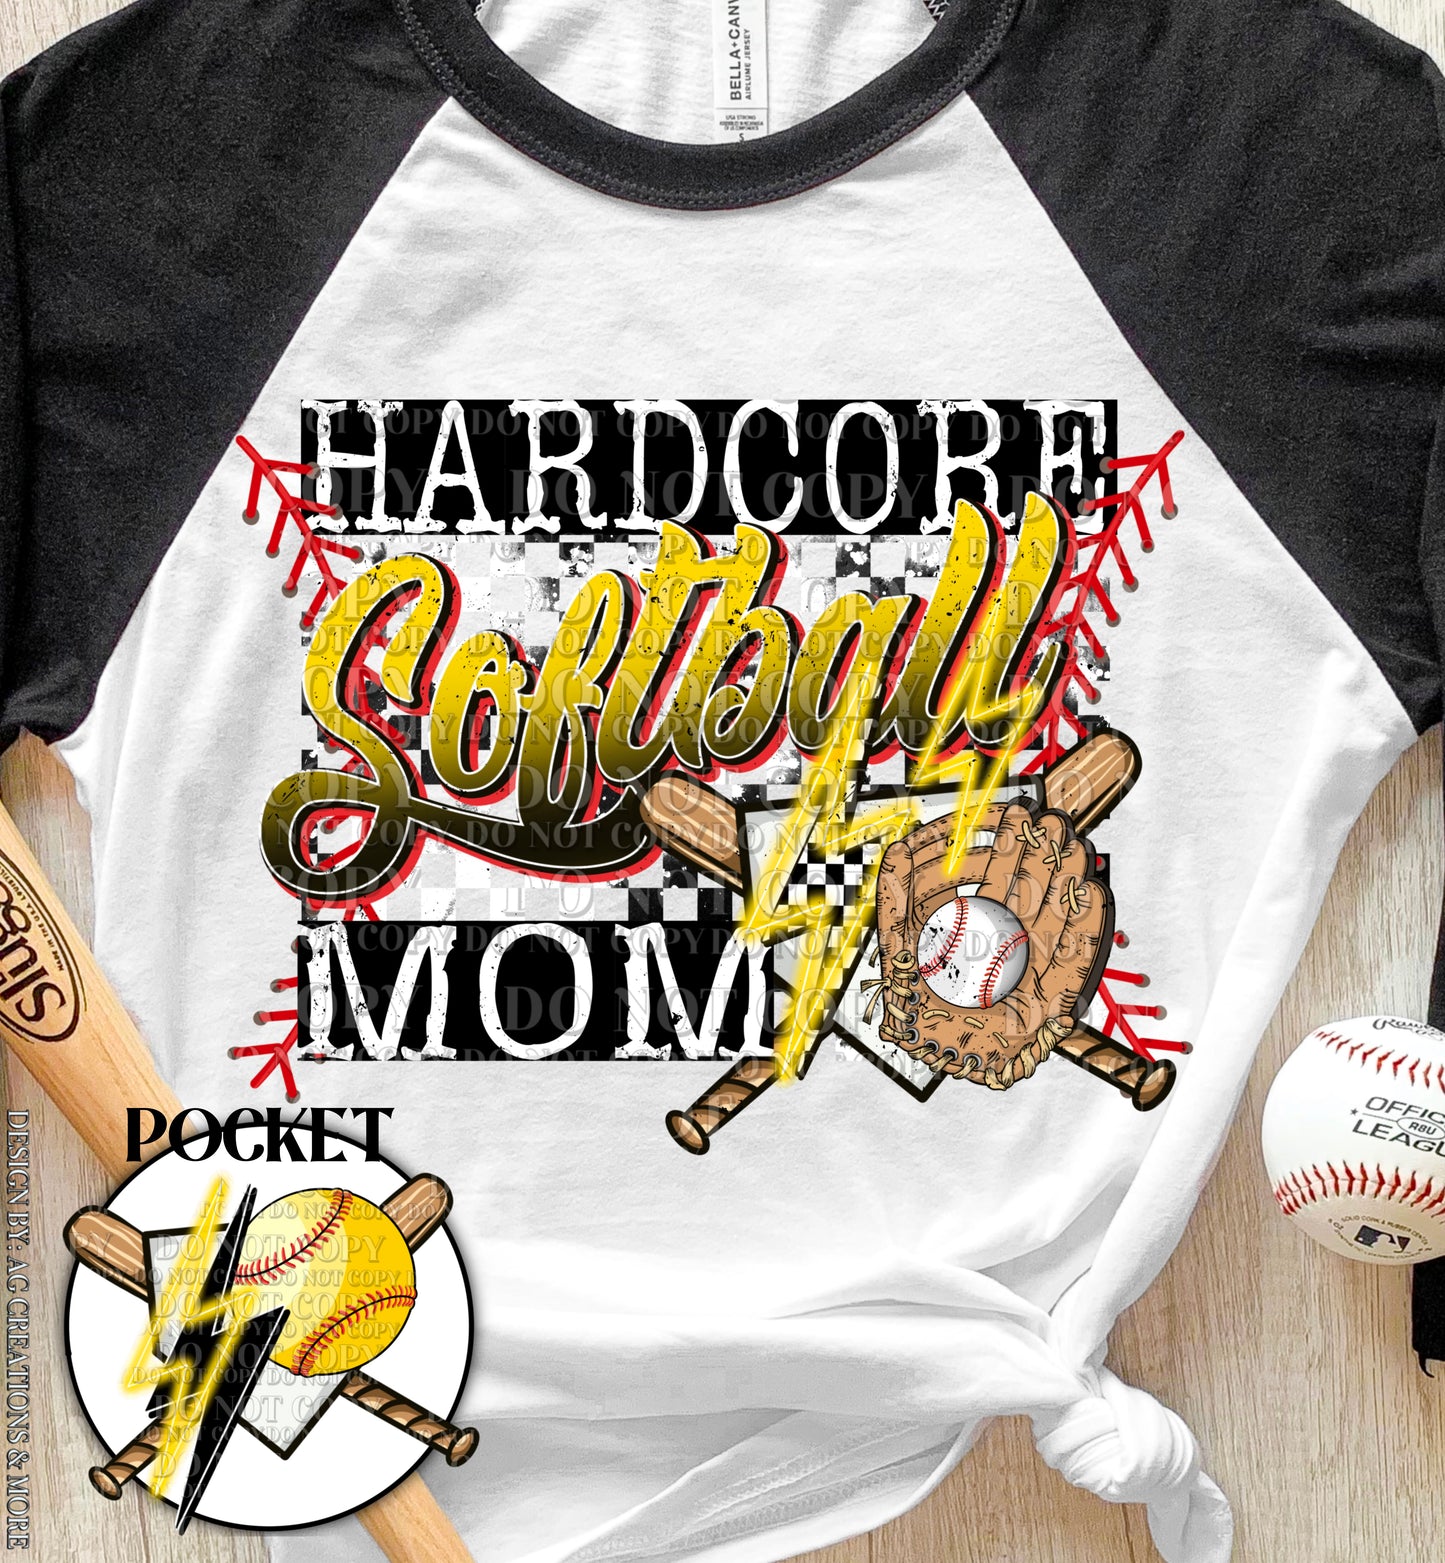 Hardcore Softball Mom DTF/UVDTF (w/Pocket/Sleeve Design)